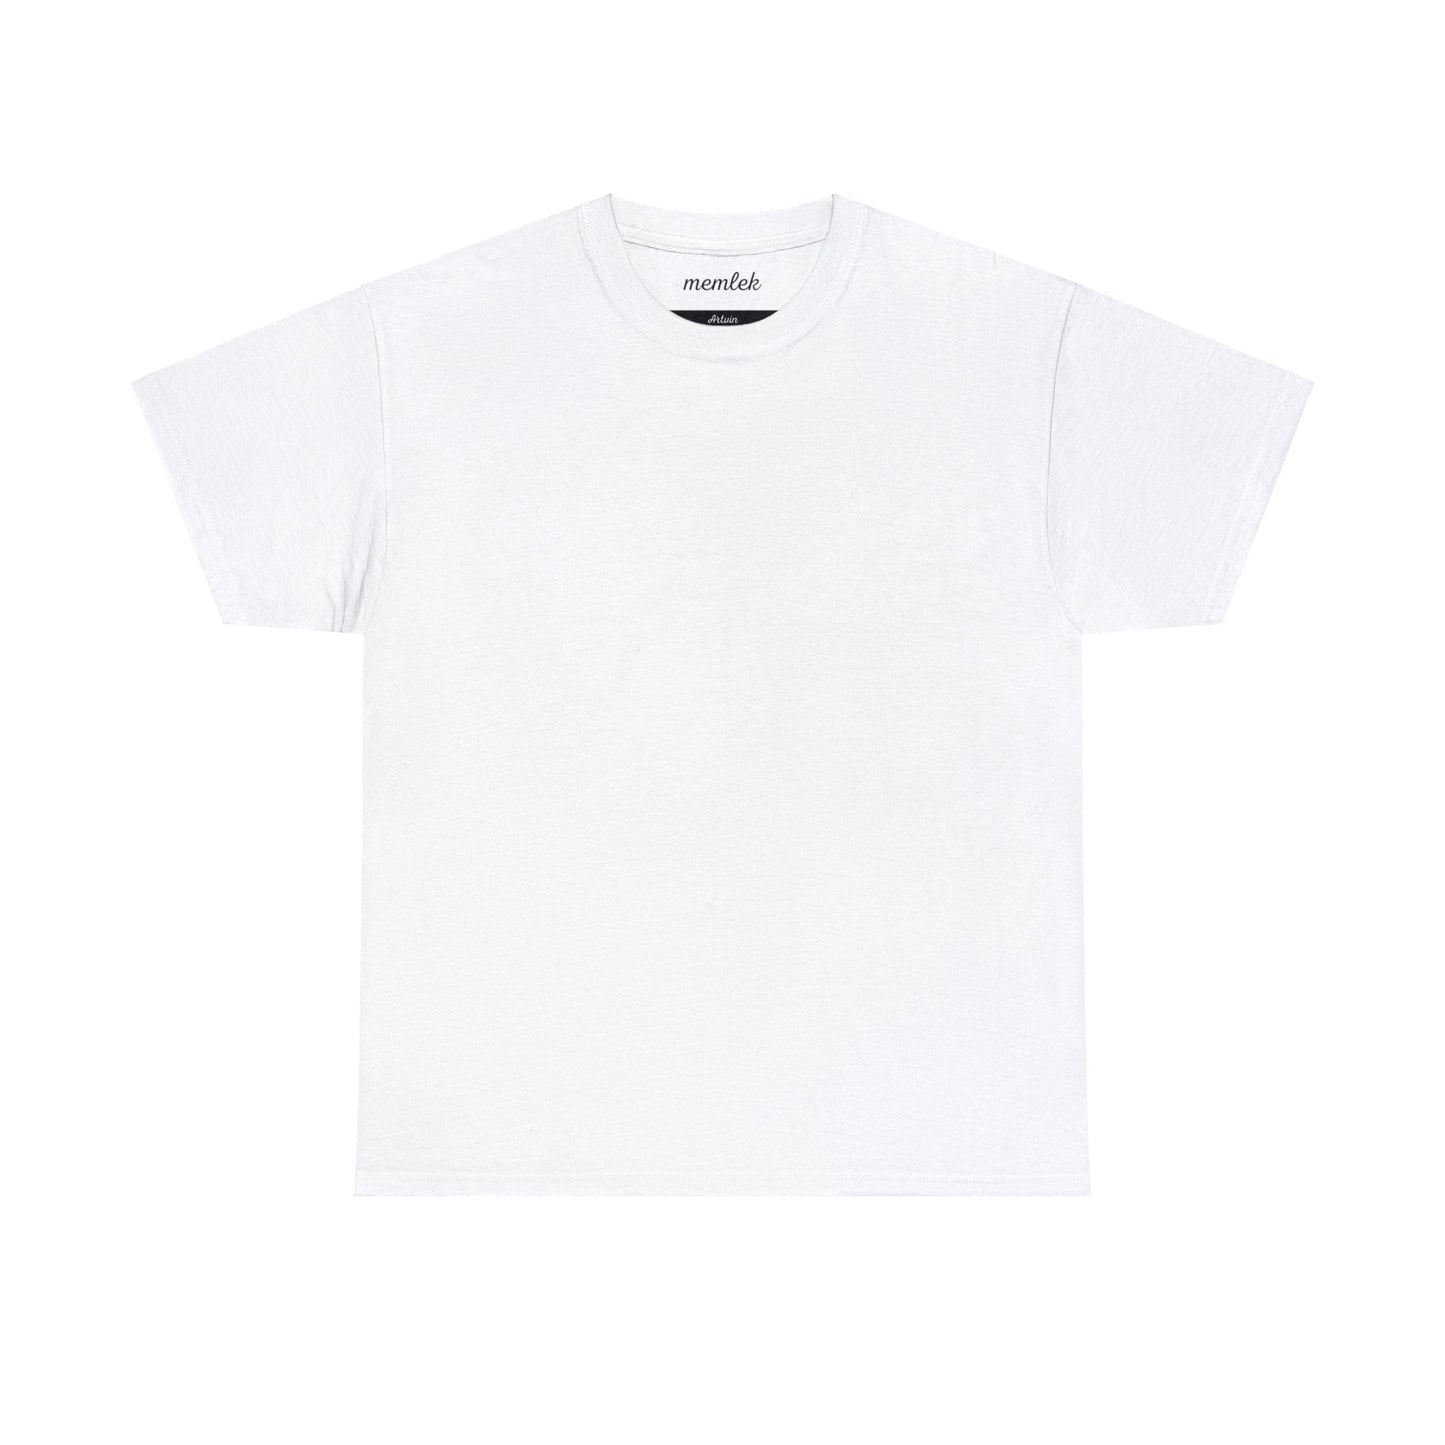 Kurt - 08 Artvin - T-Shirt - Back Print - Black/White